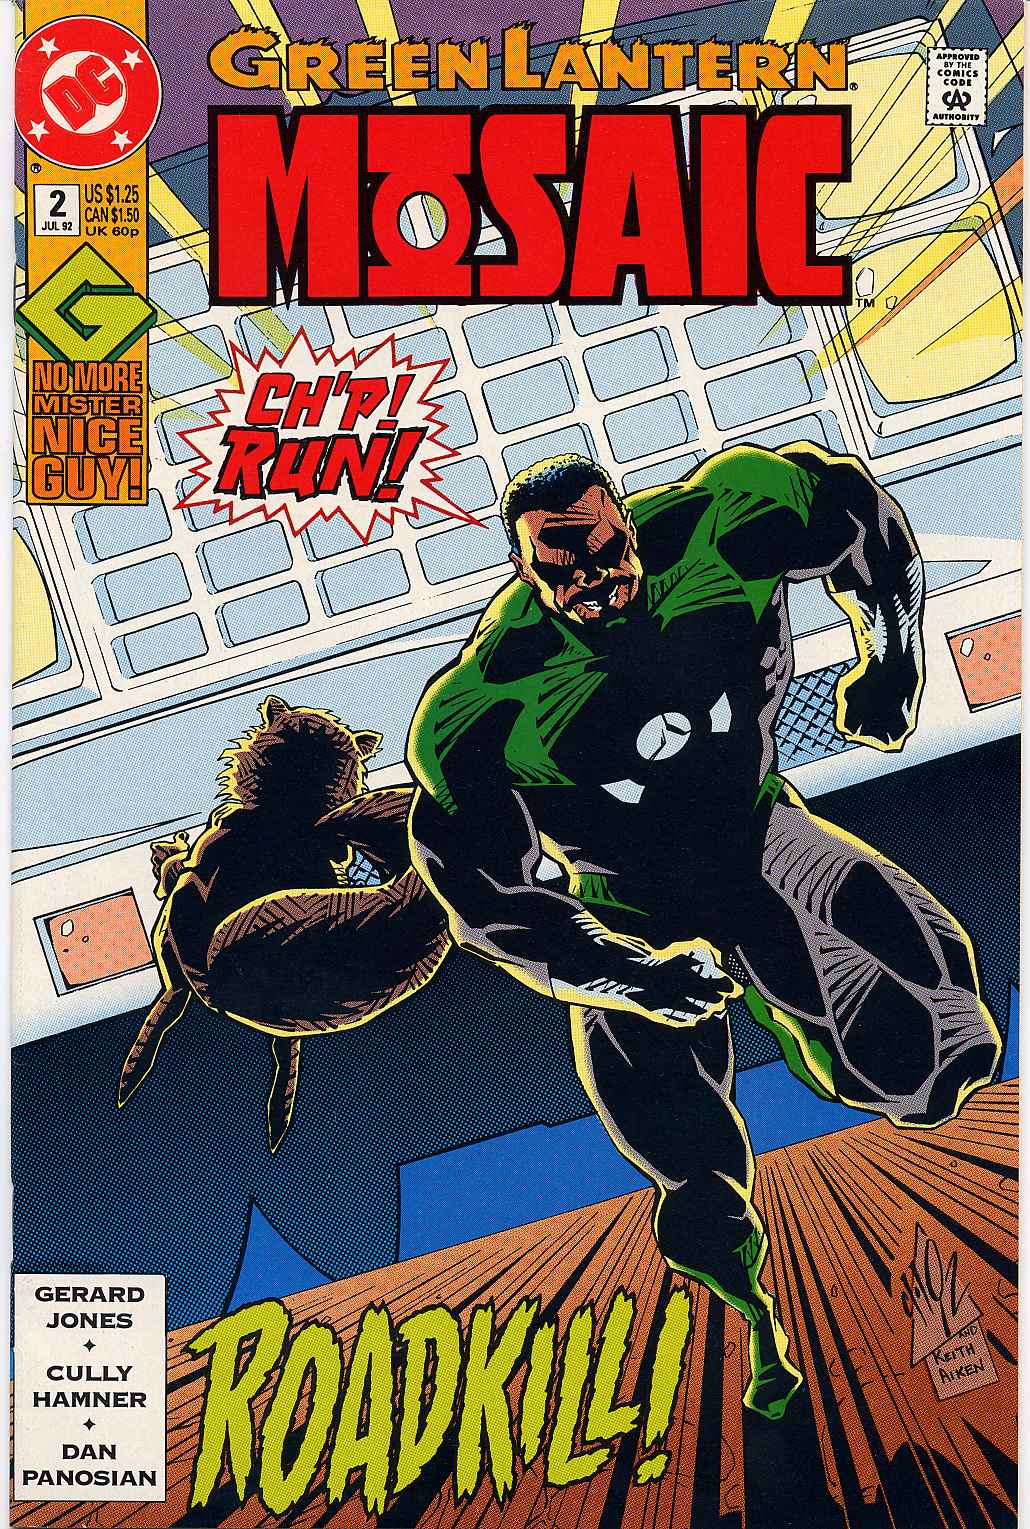 Green Lantern: Mosaic issue 2 - Page 1